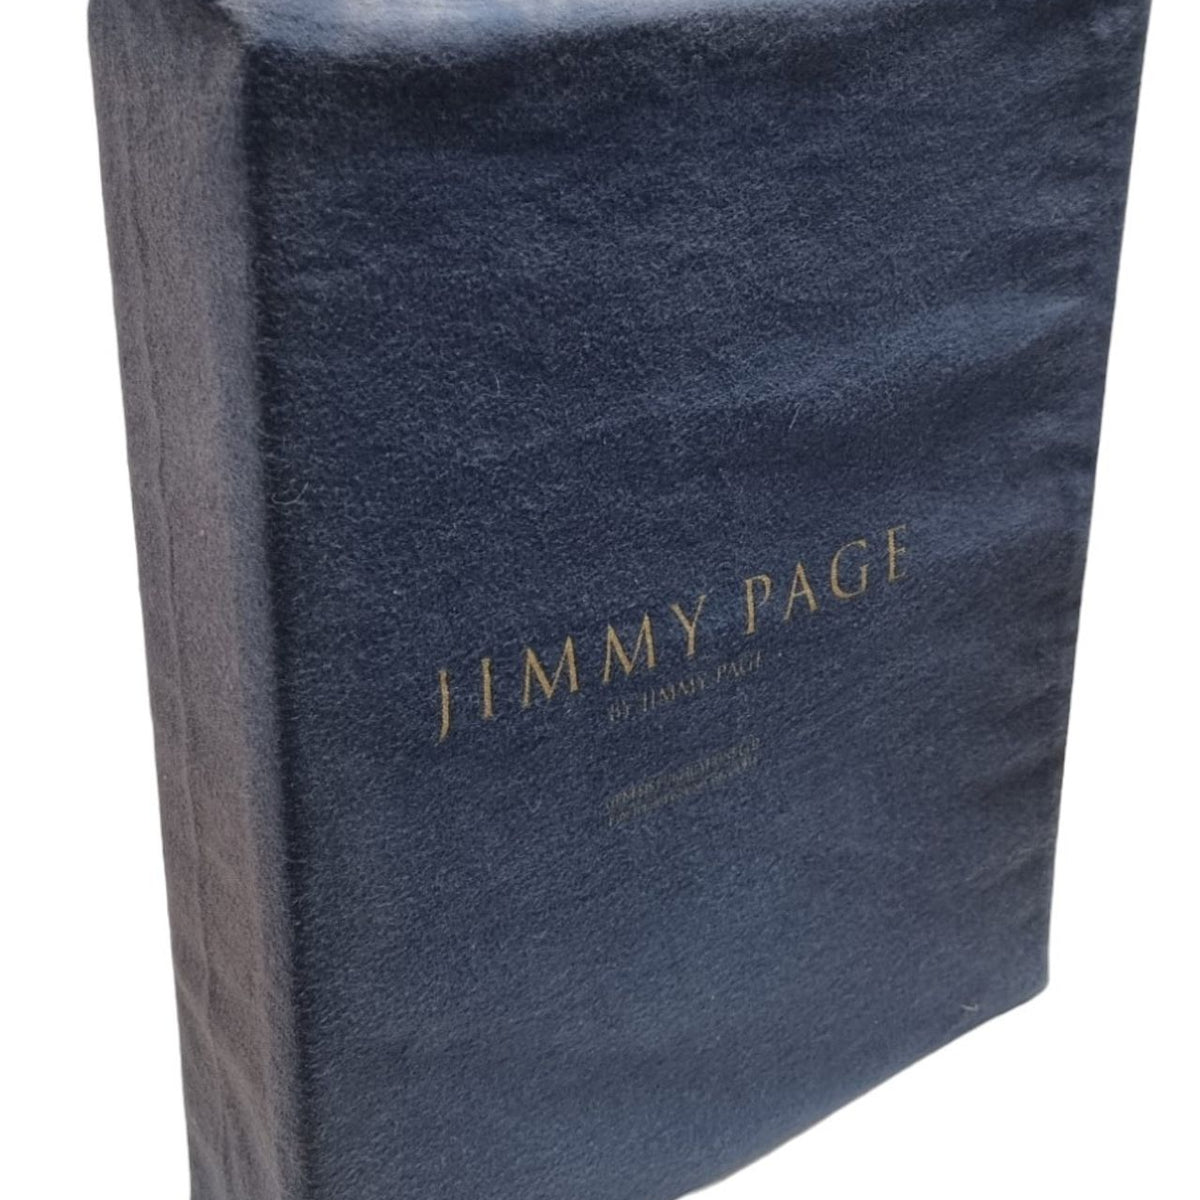 Jimmy Page by Jimmy Page: Page, Jimmy: 9781905662326: : Books